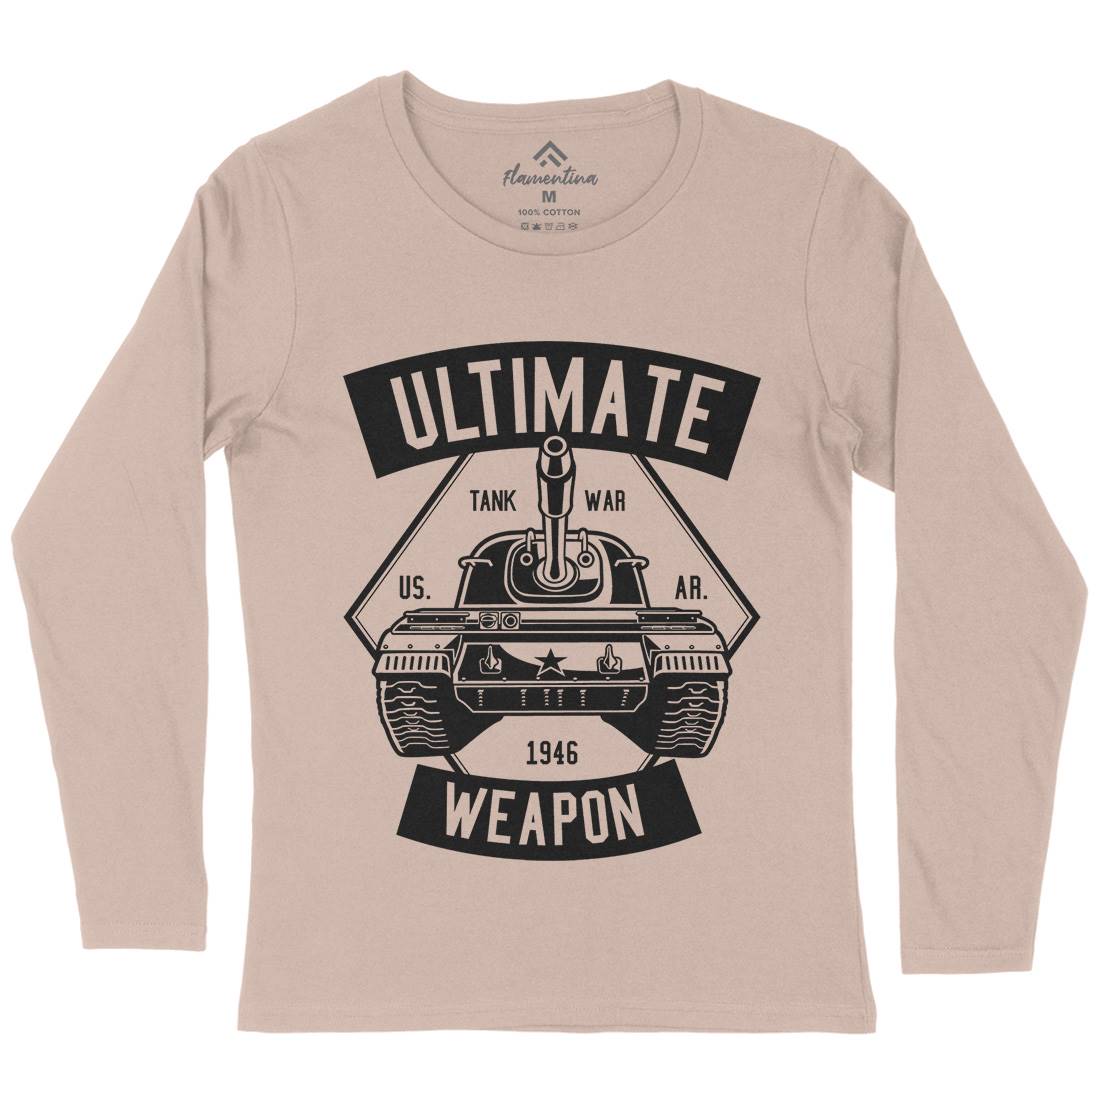 Tank War Ultimate Weapon Womens Long Sleeve T-Shirt Army B649